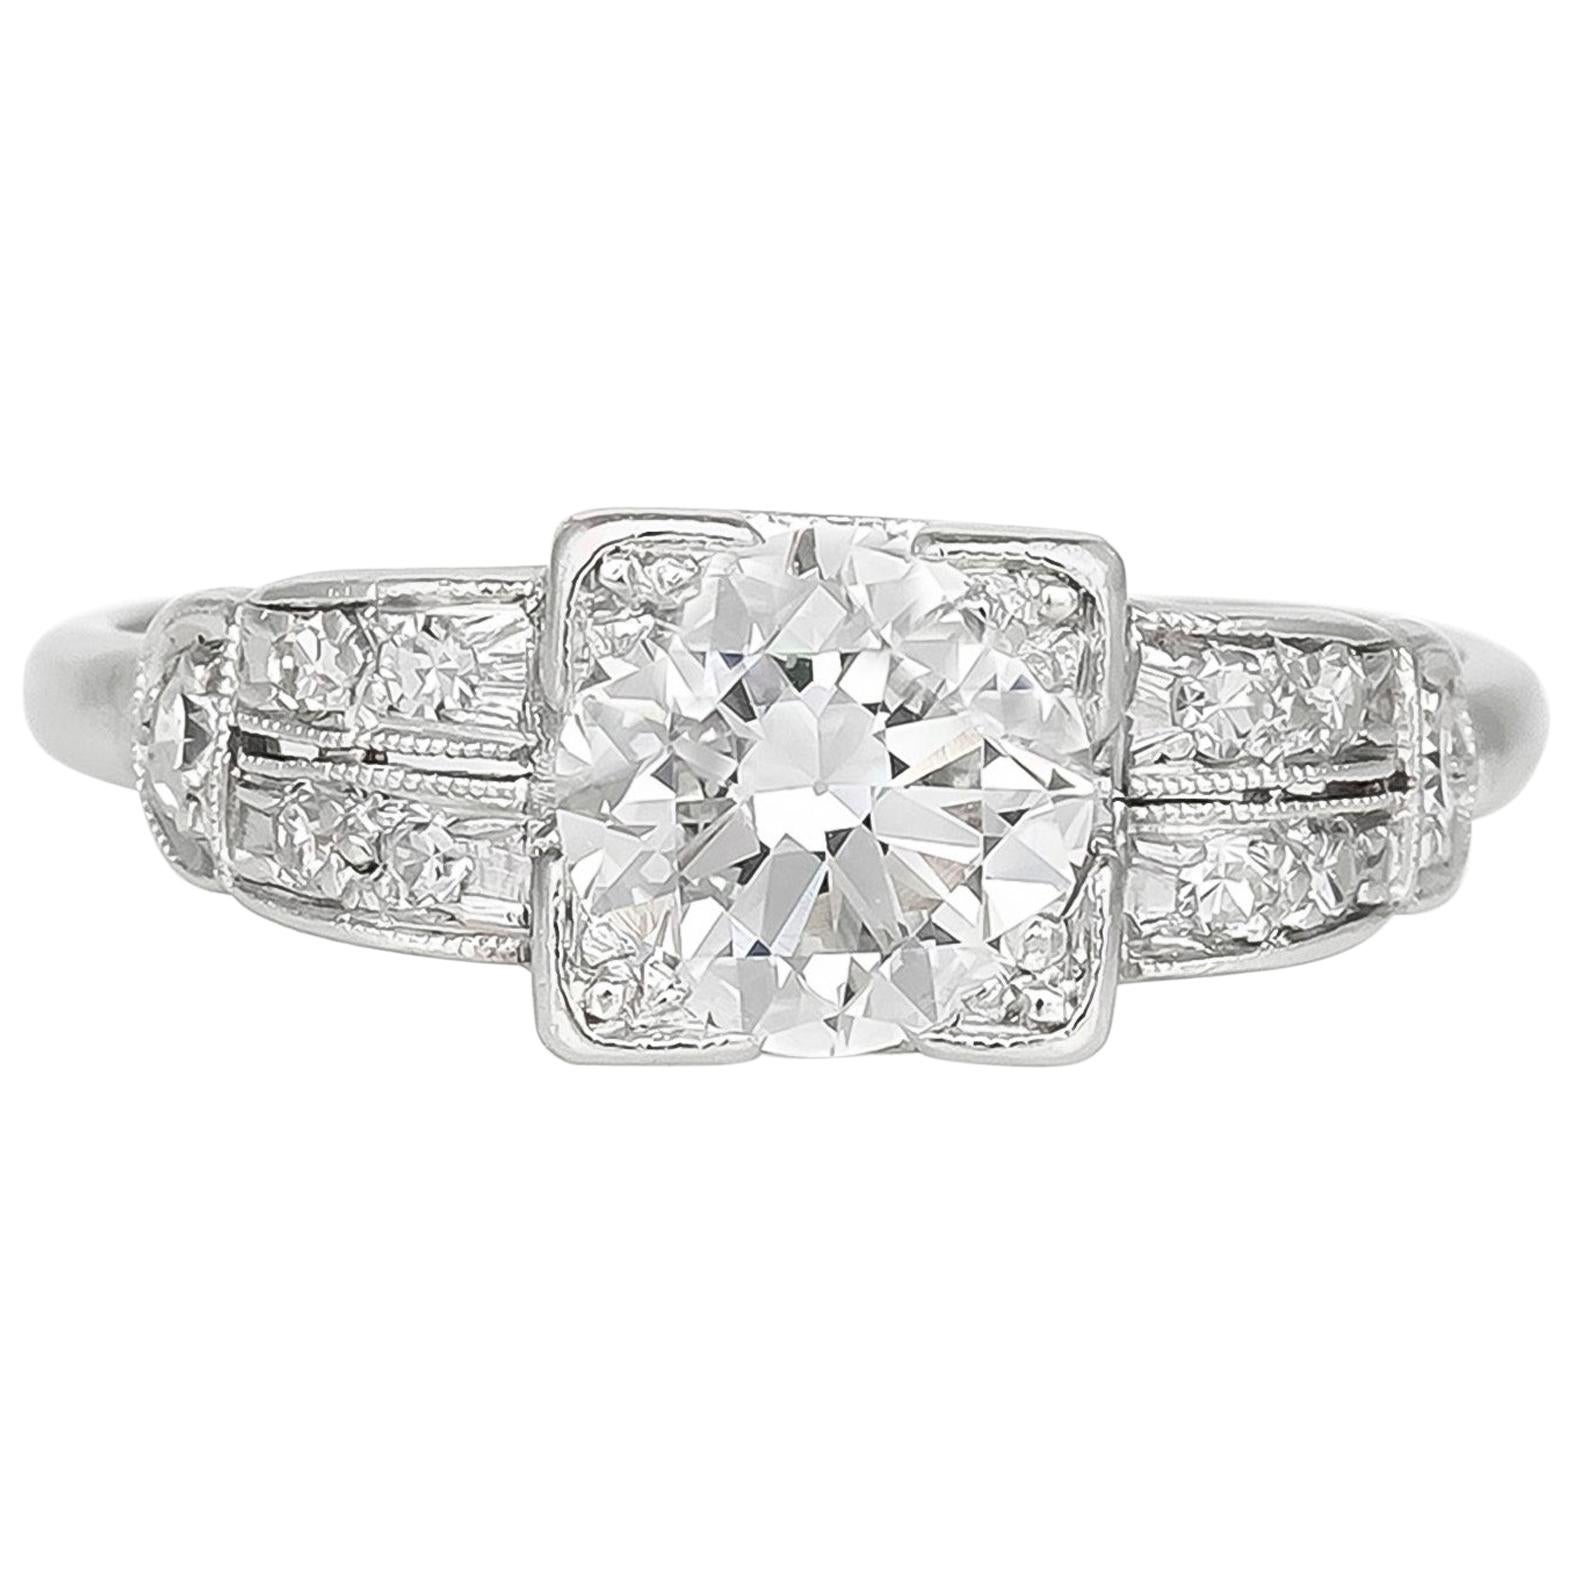 1920s-1930s Platinum Filigree 1.10 Carat Center Diamond Engagement Ring For Sale